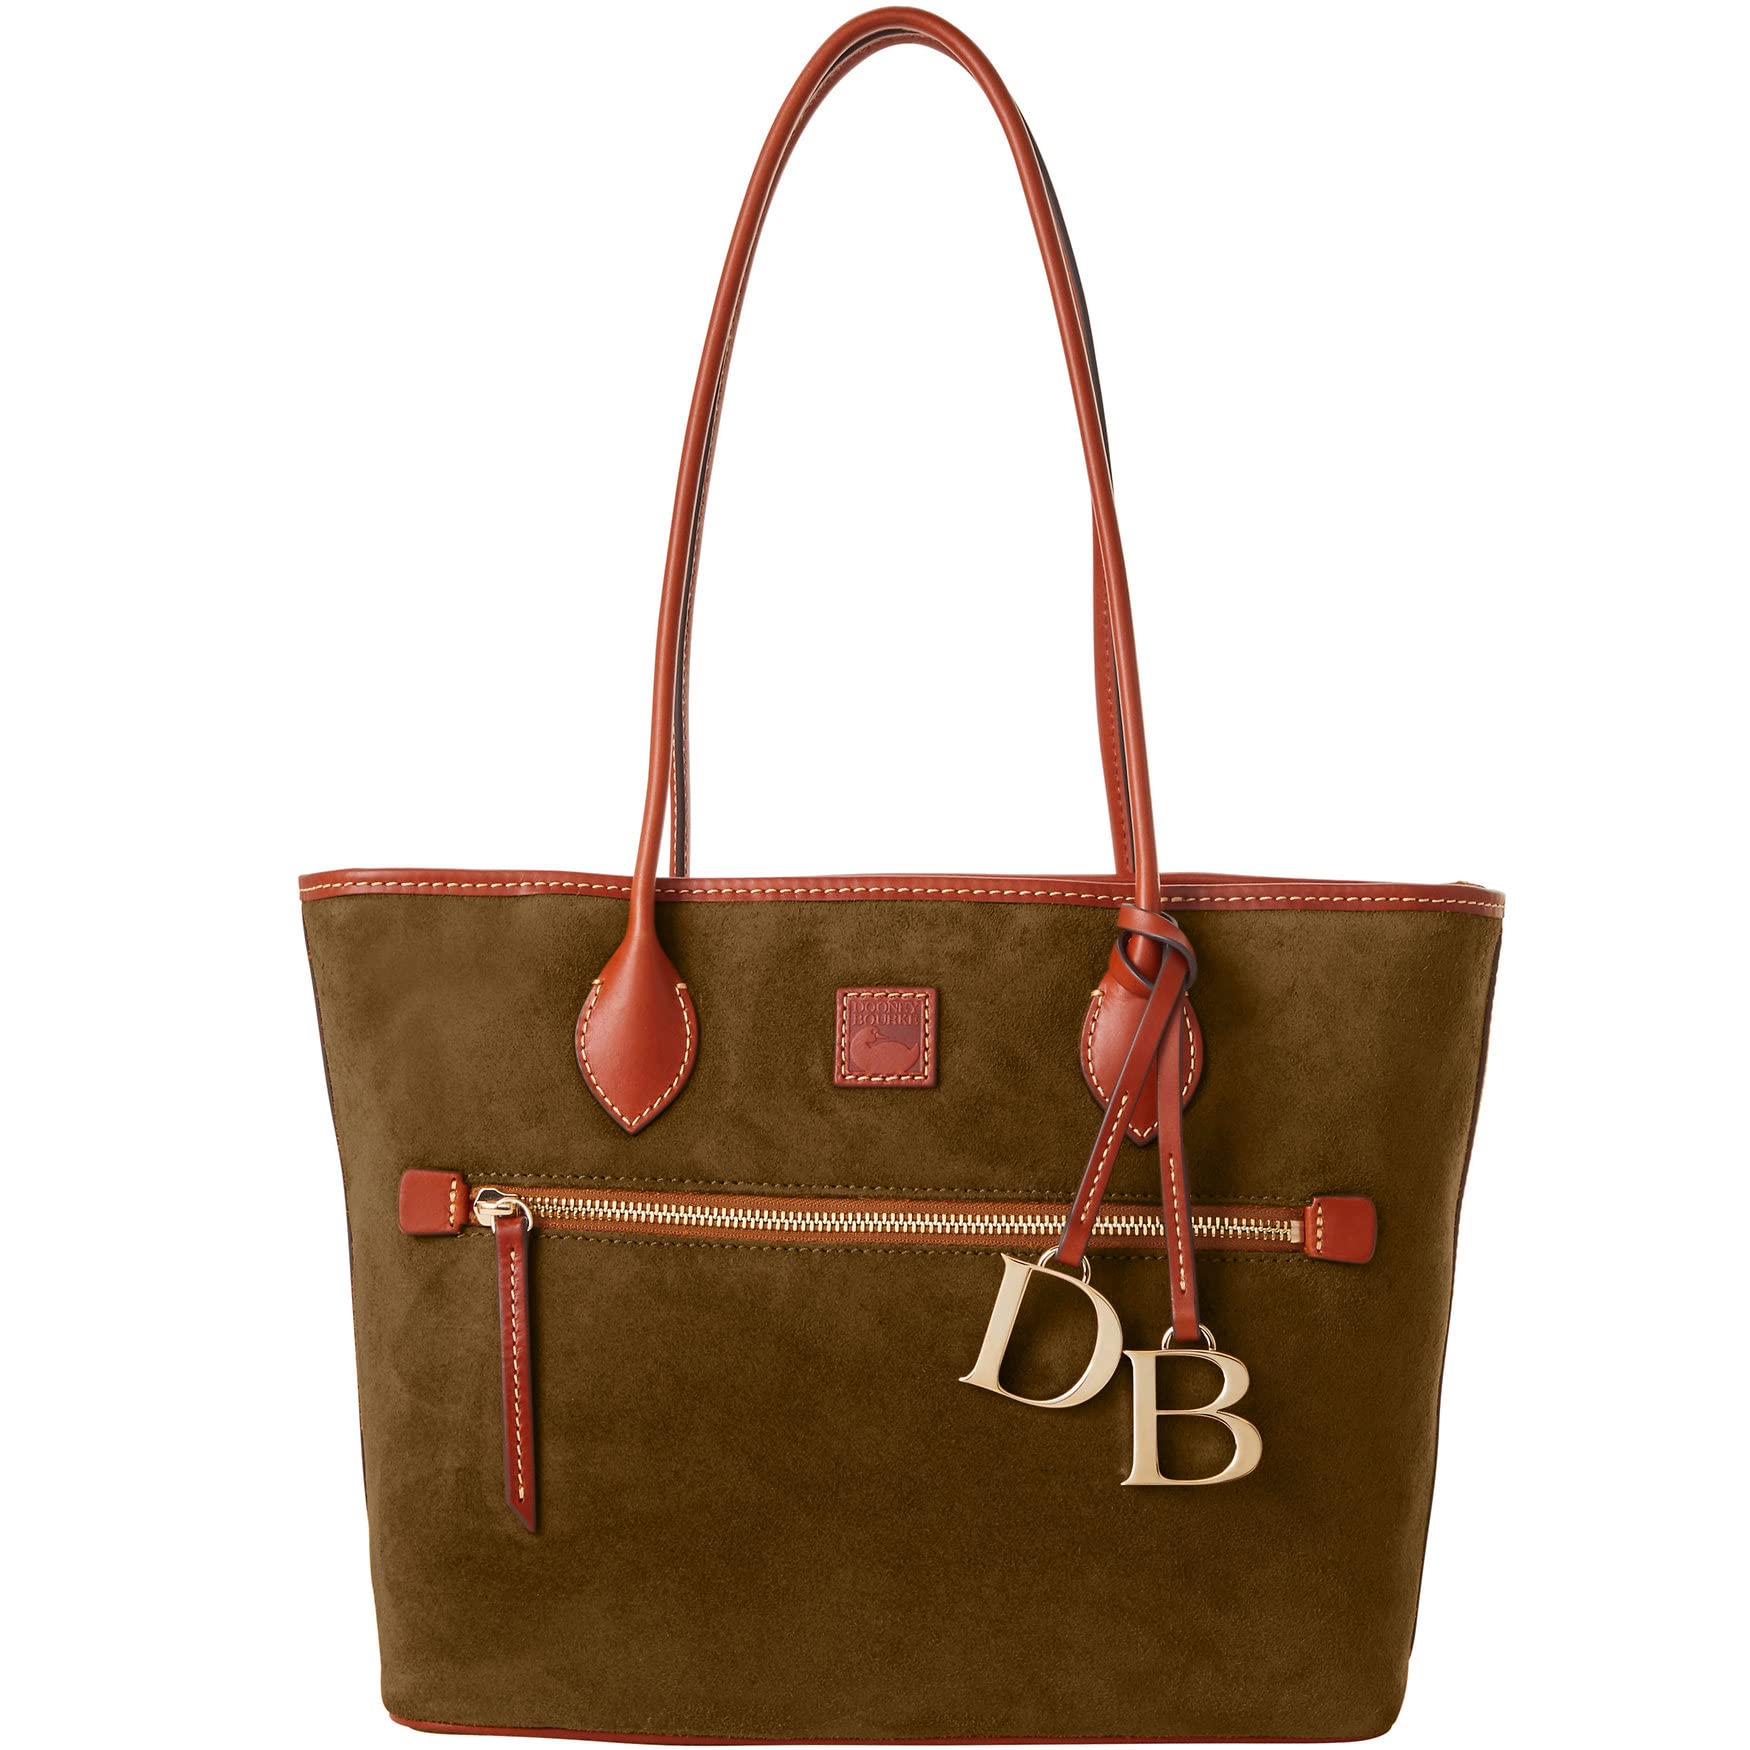 Dooney & Bourke Handbag, Suede Tote